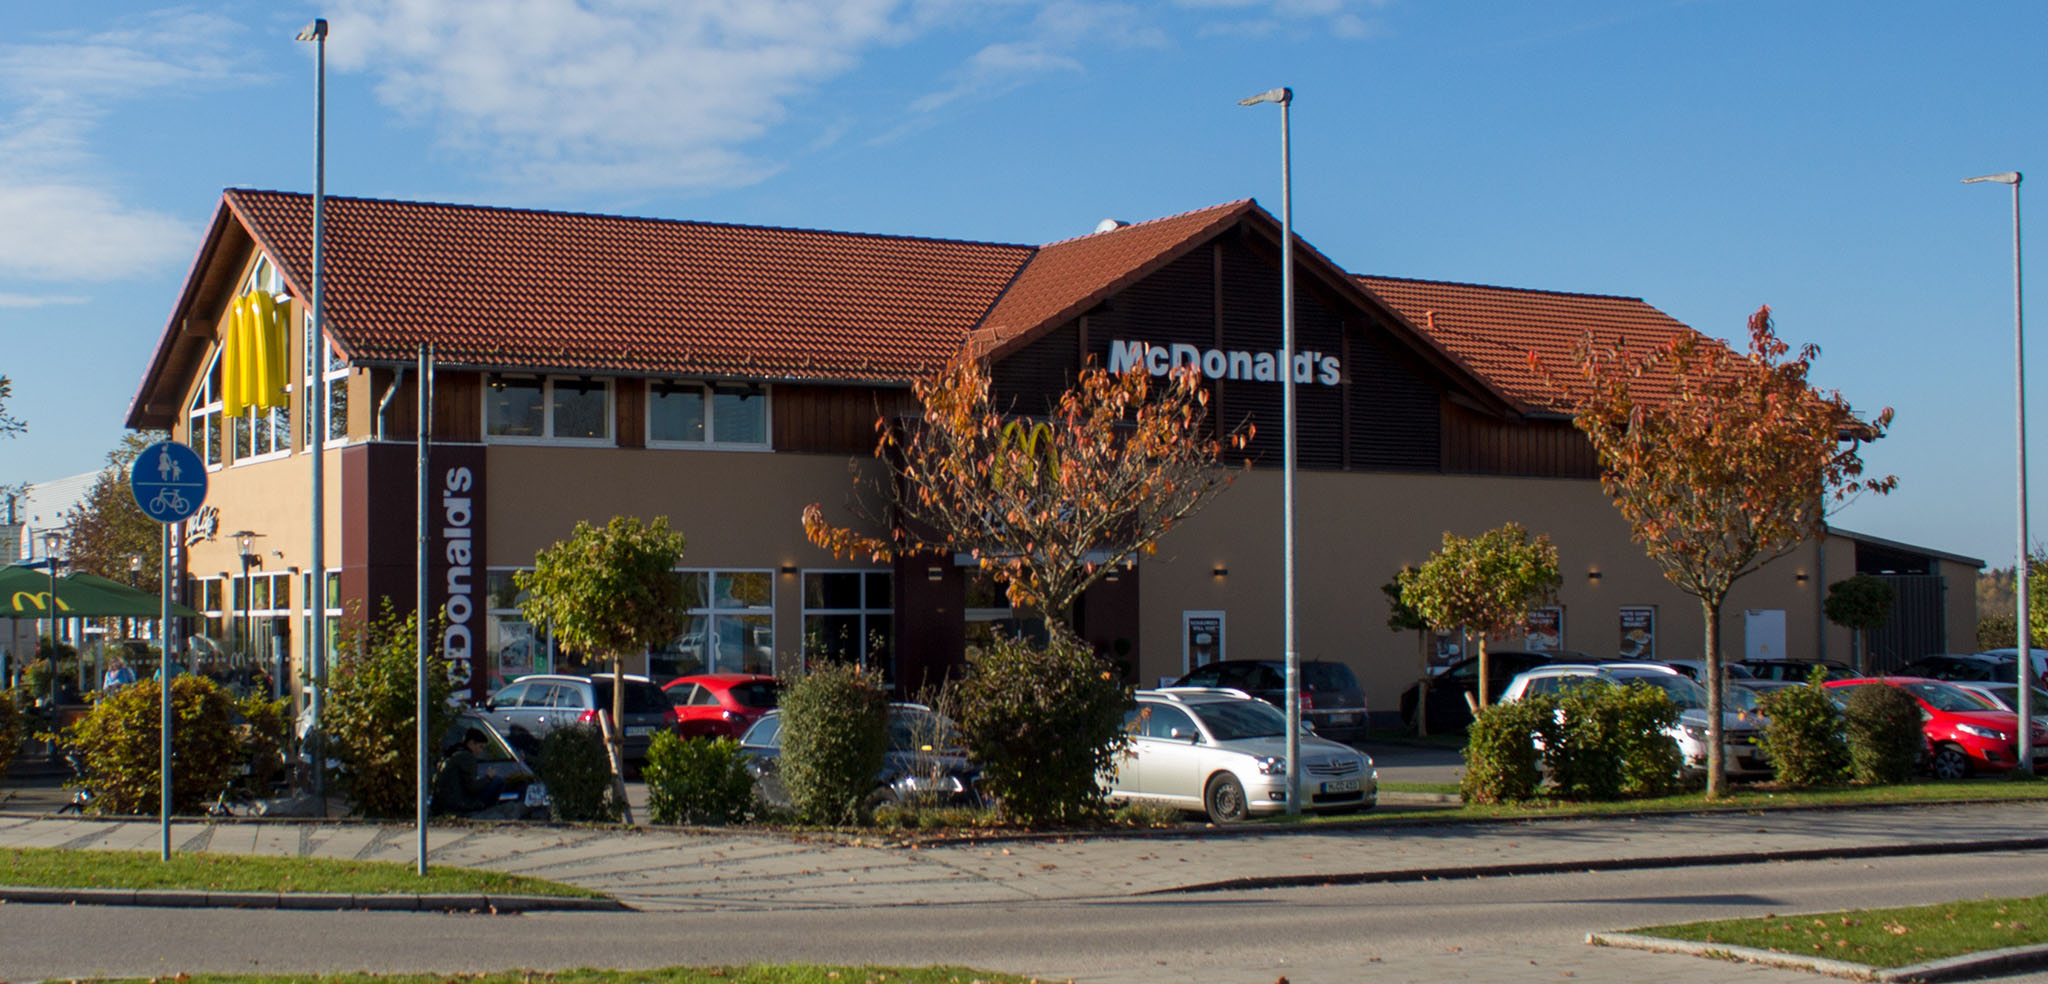 Das McDonald’s-Restaurant in Unterhaching